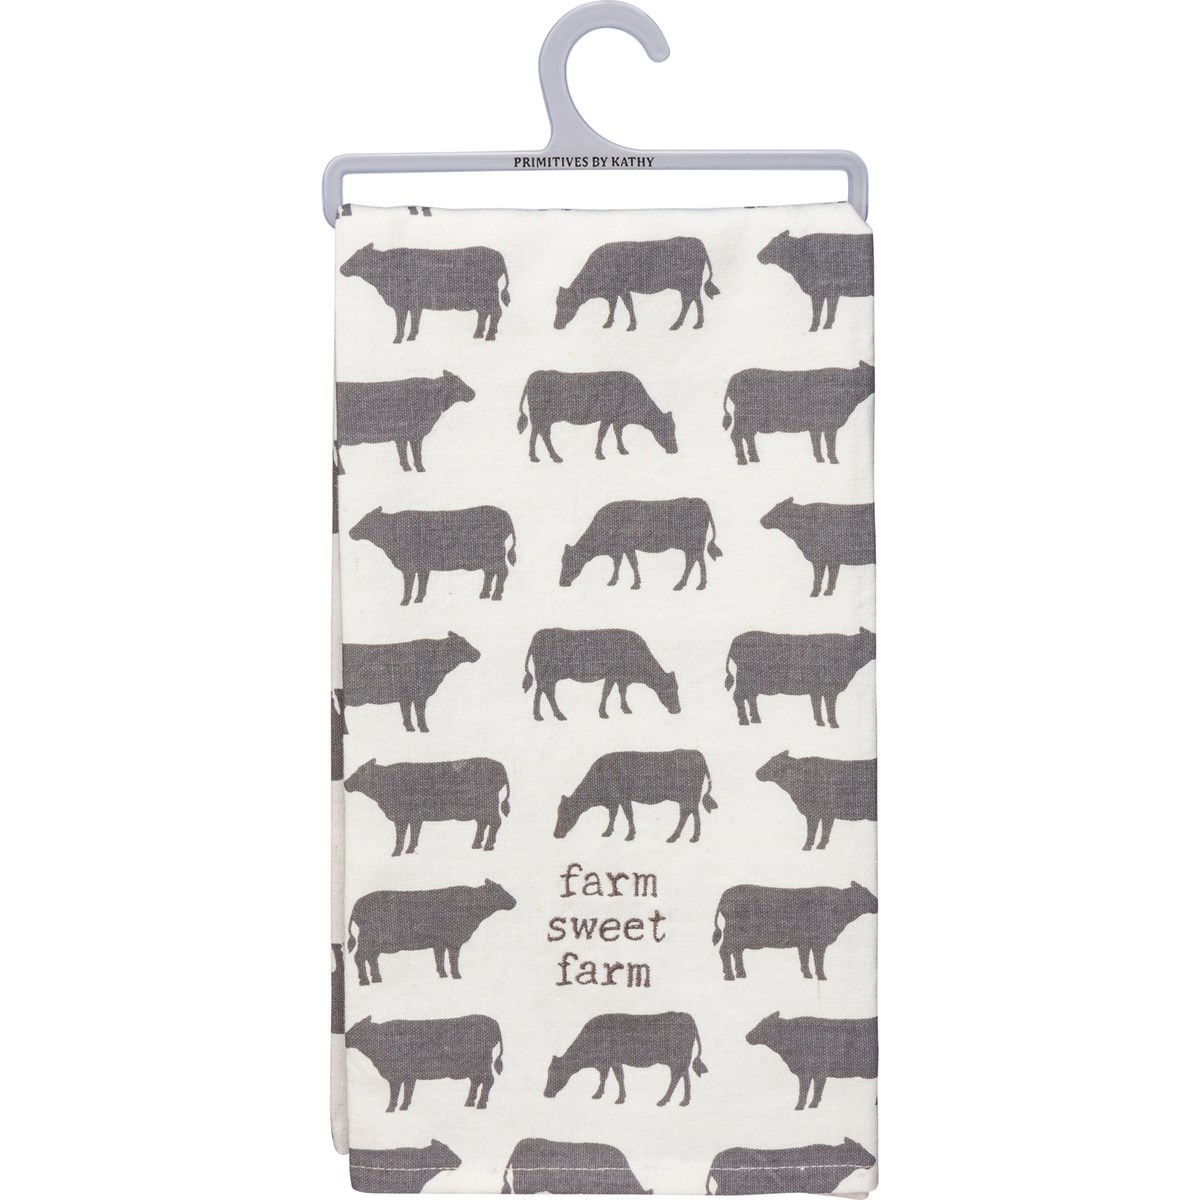 Farm Sweet Farm Cow Kitchen Towel - Cotton, Linen